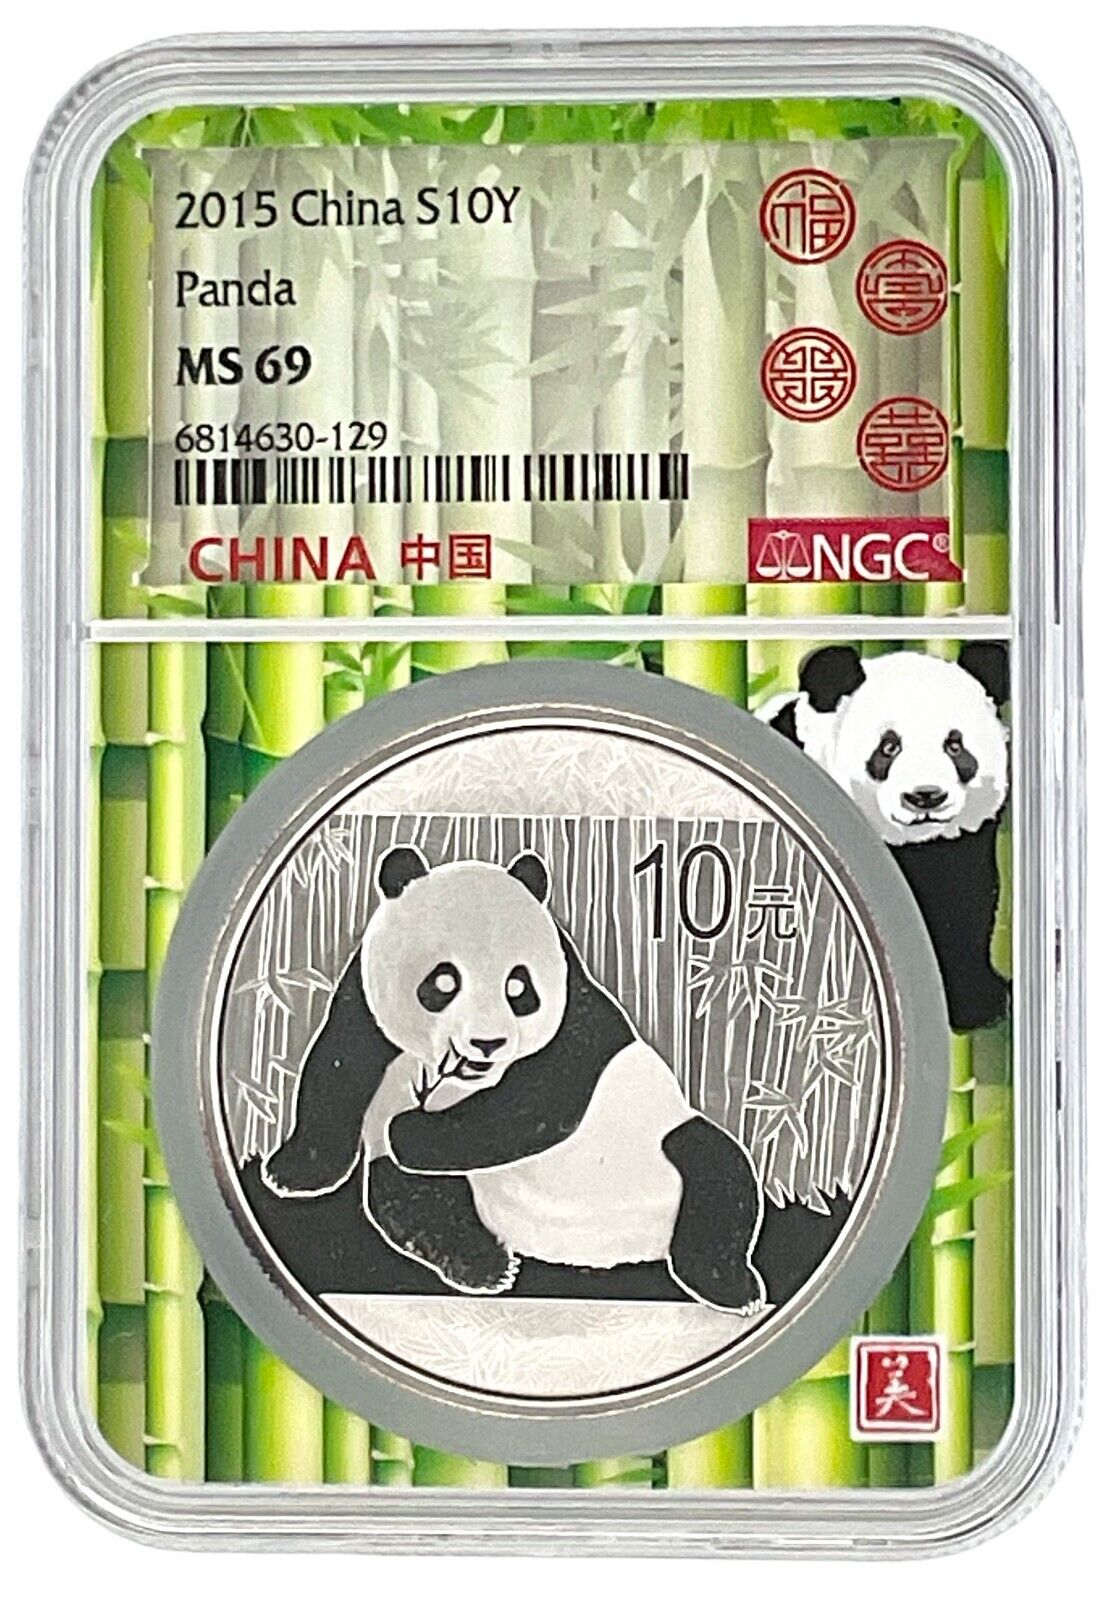 2015 China 10 Yuan Silver Panda NGC MS69 - Bamboo Picture Core